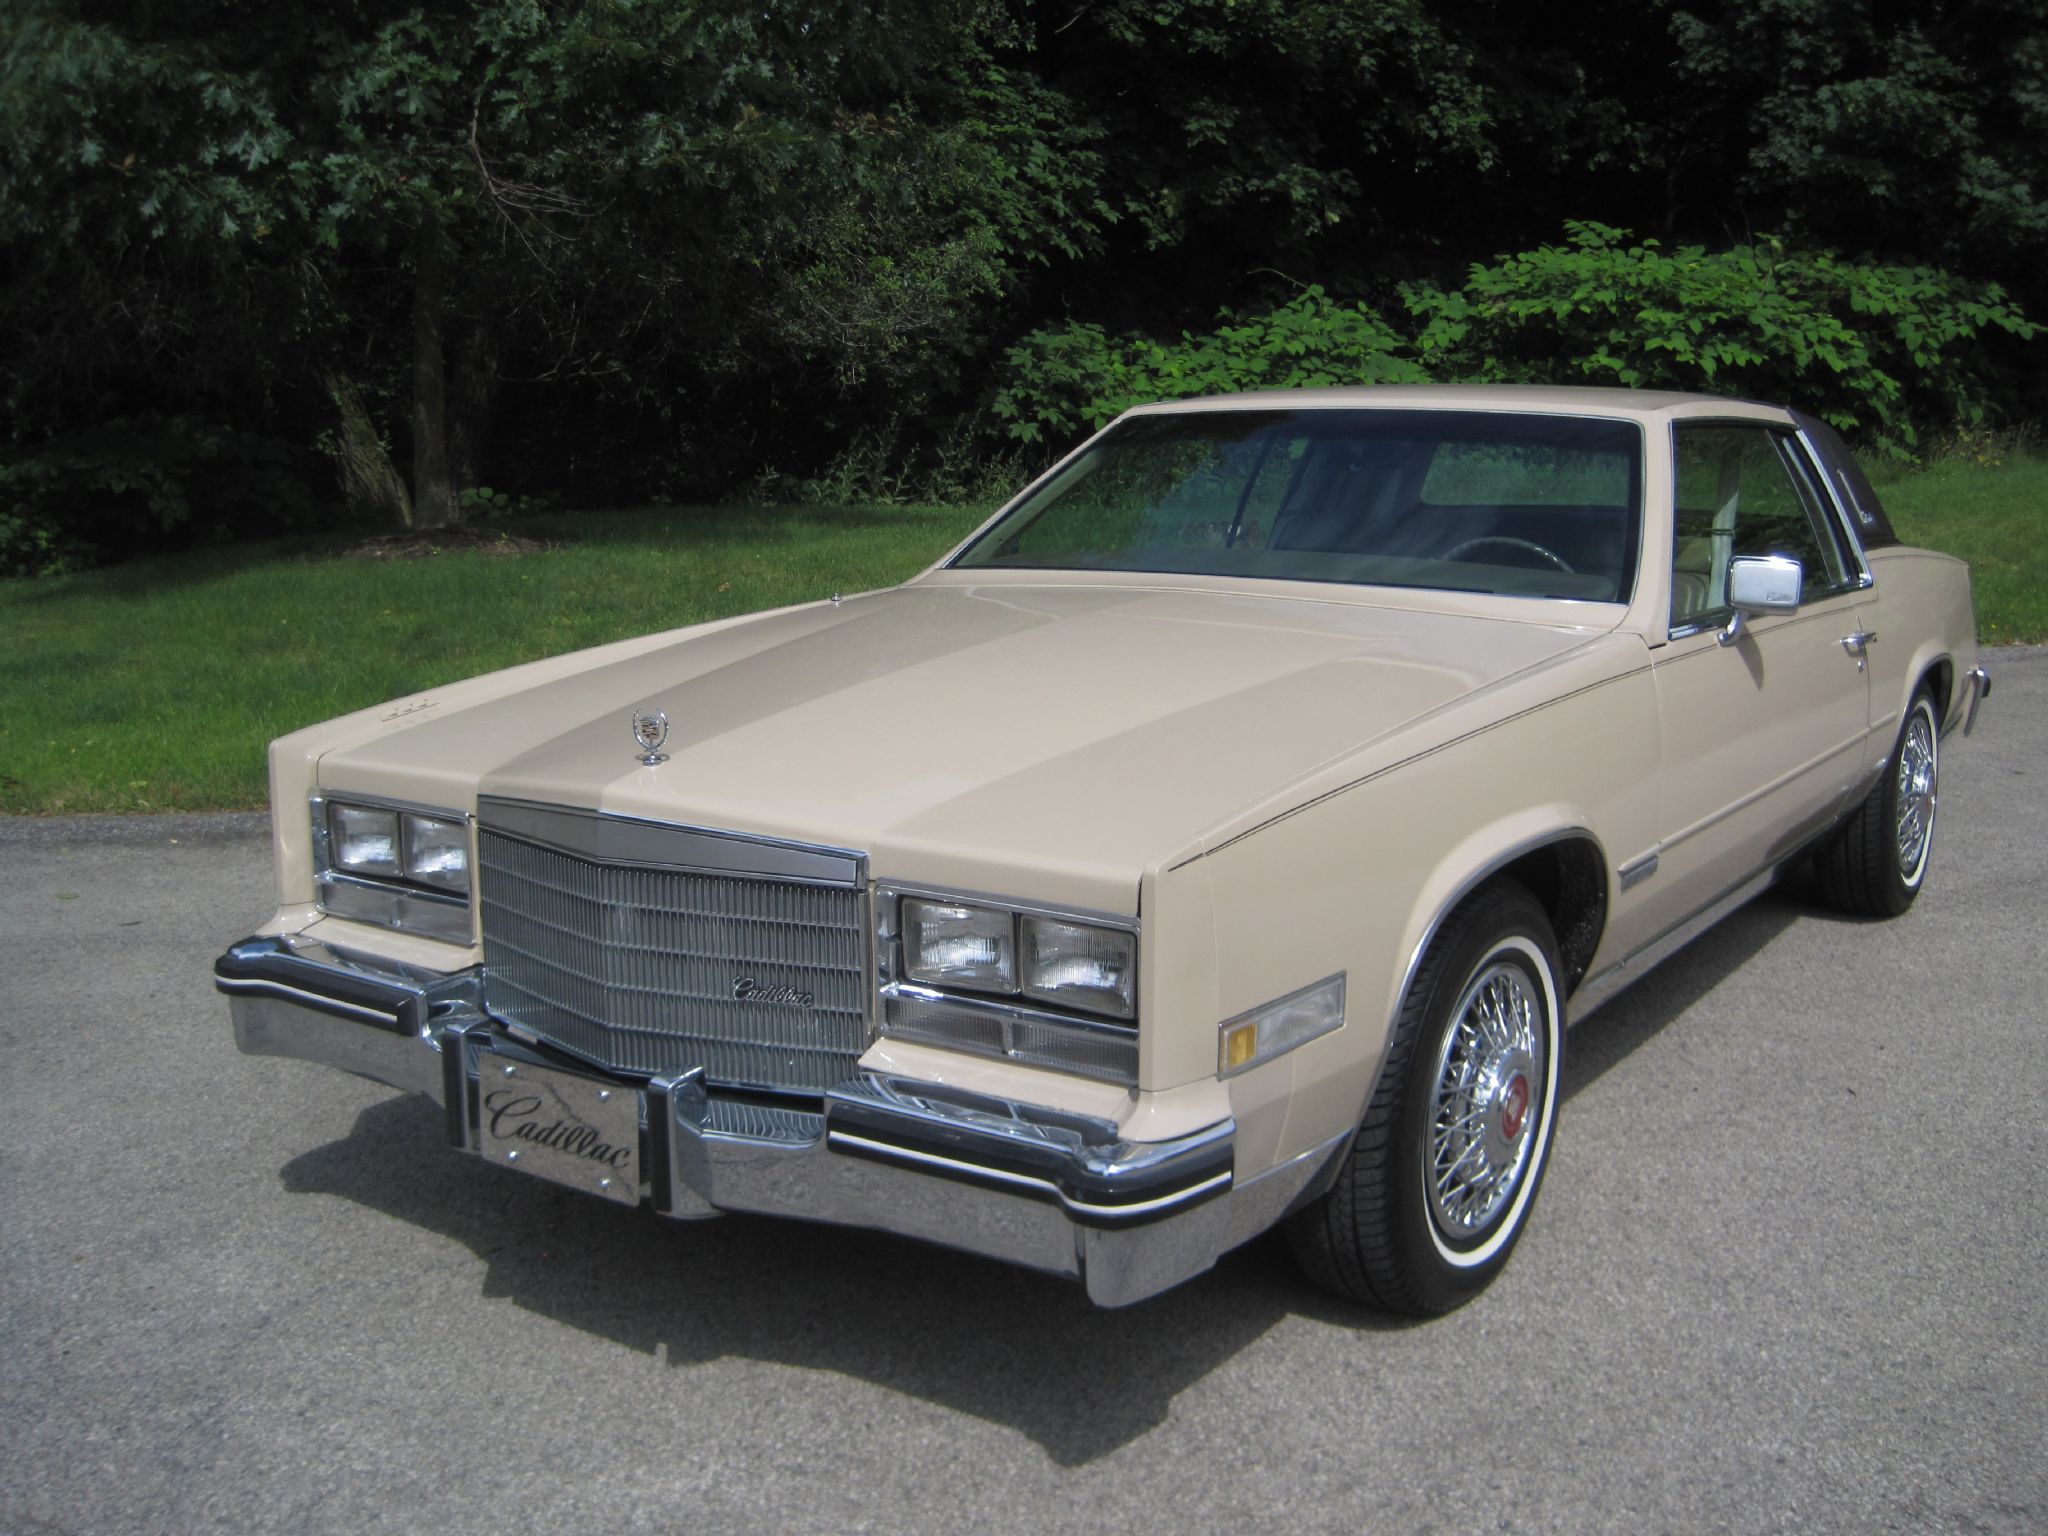  Cadillac Eldorado-Mint- Collector Owned - 44K Miles -